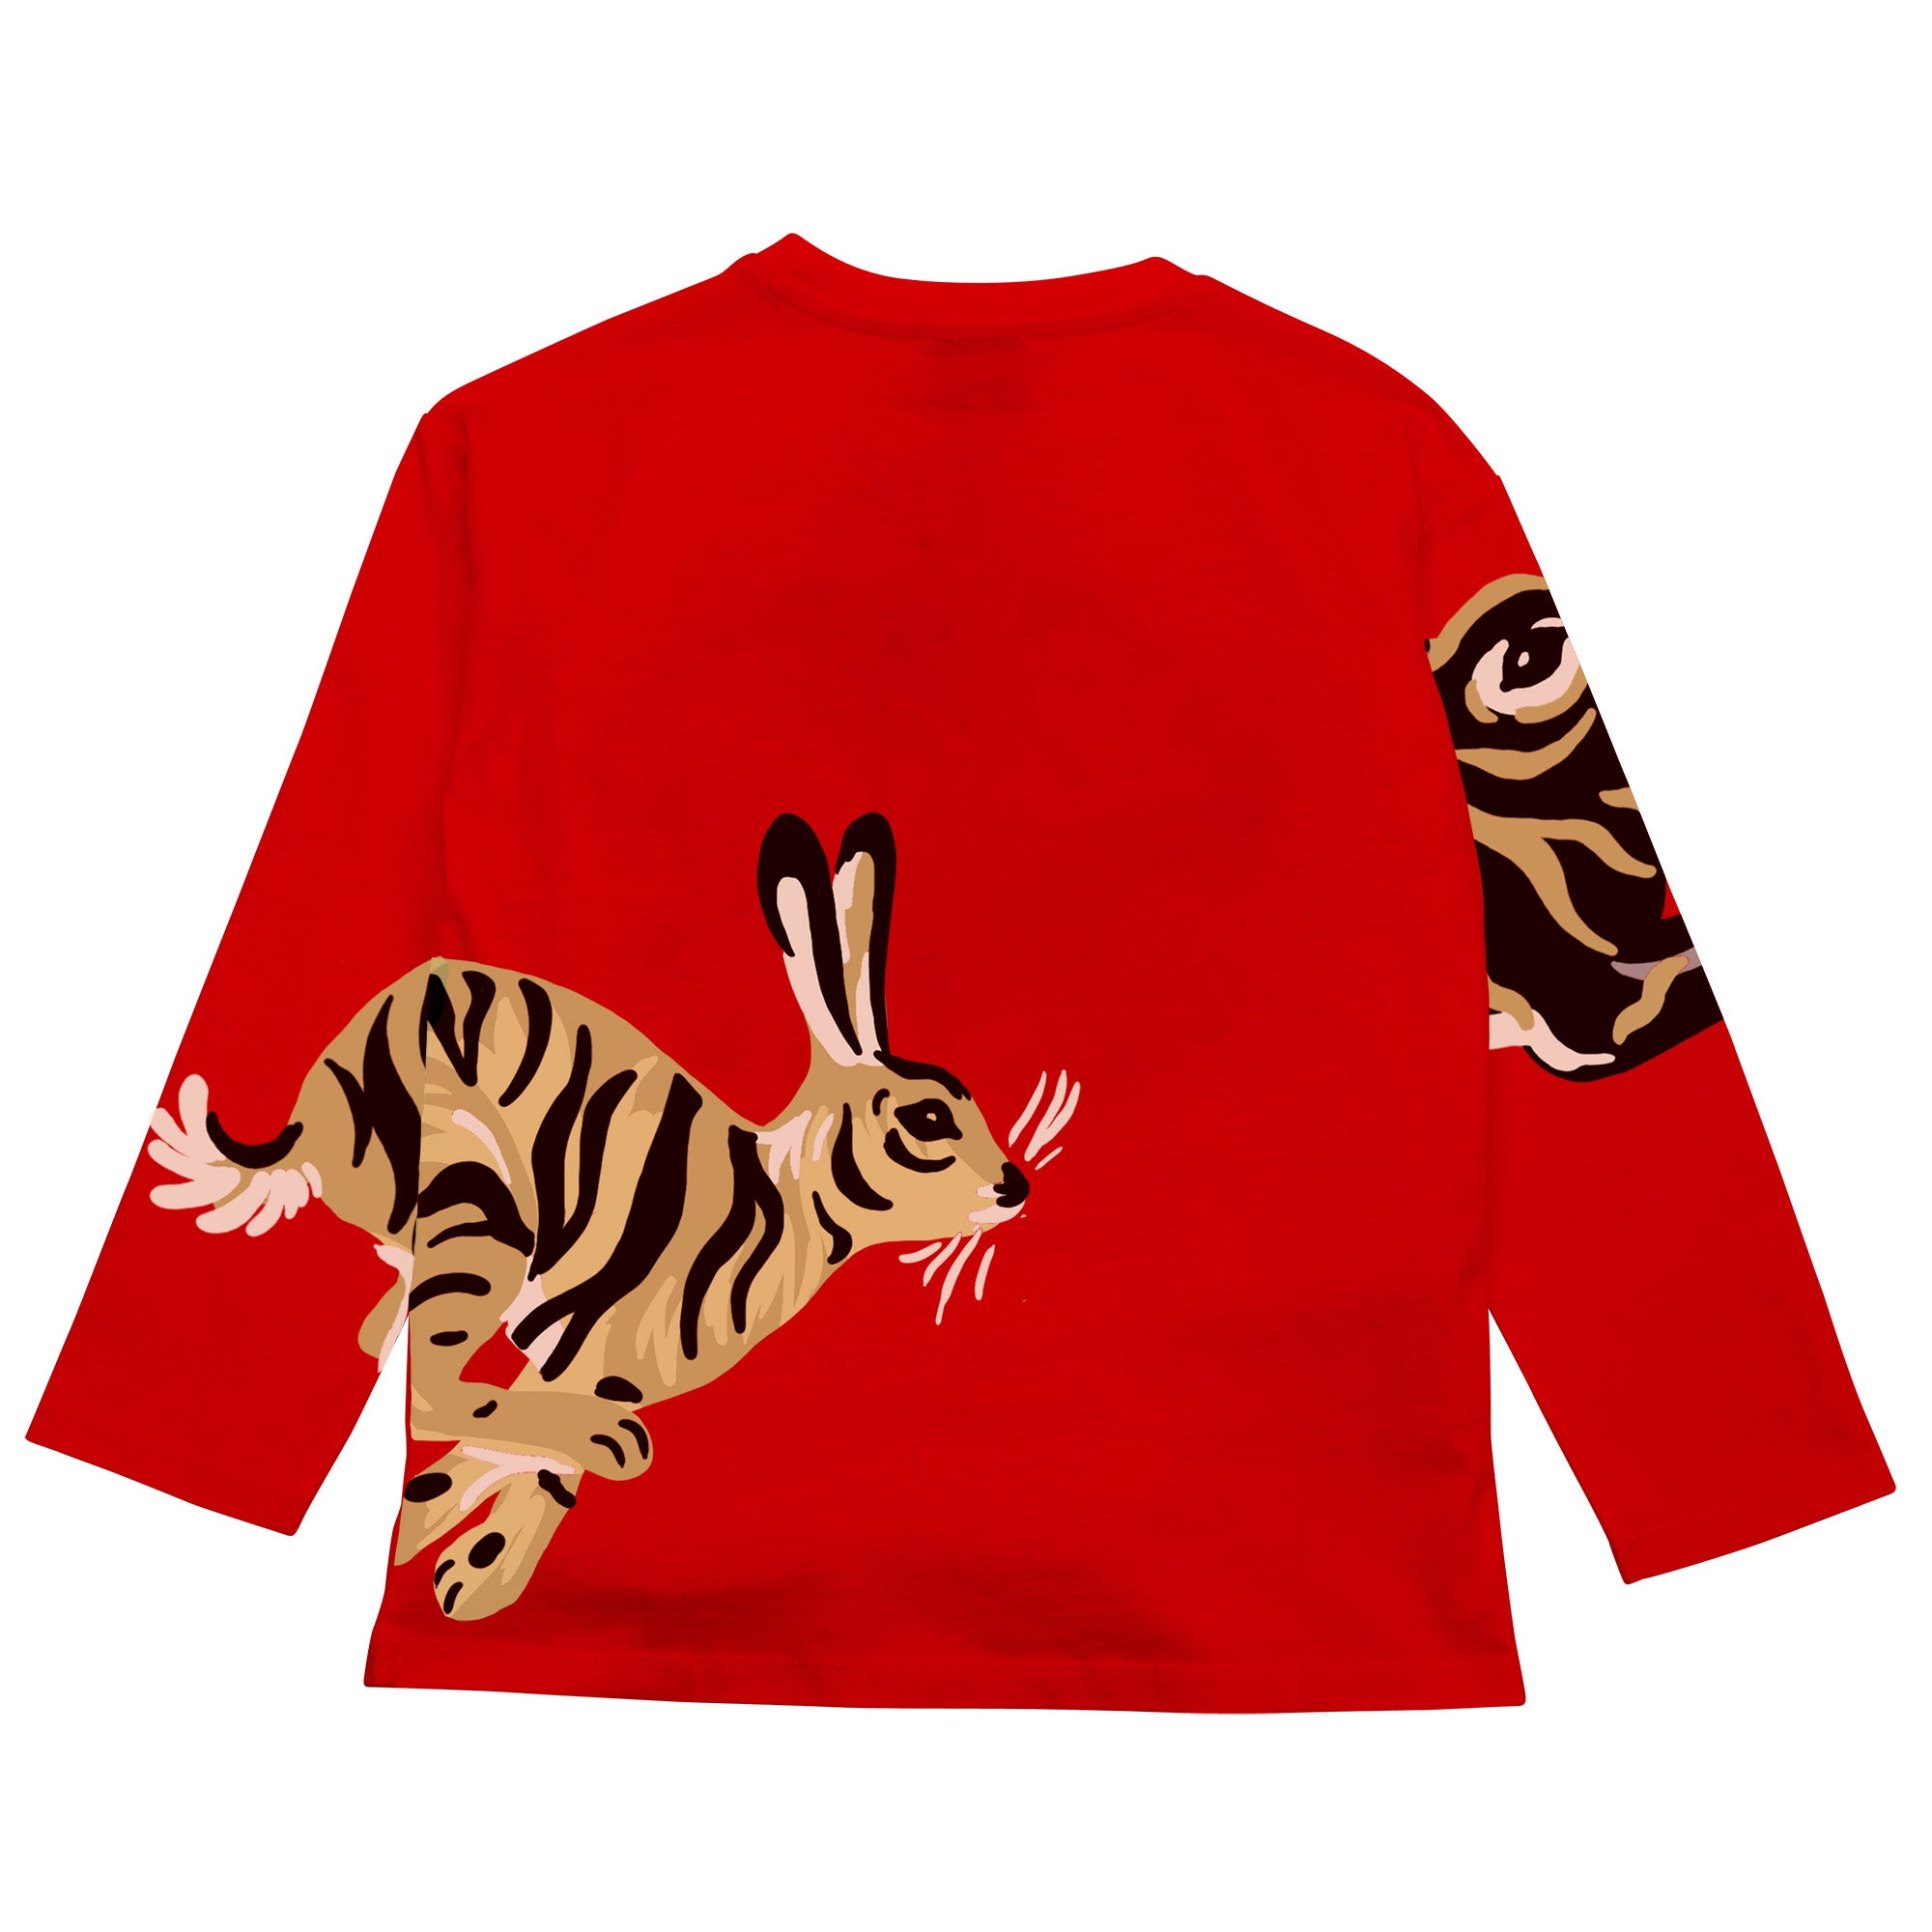 Boys & Girls Red Printed Cotton T-Shirt